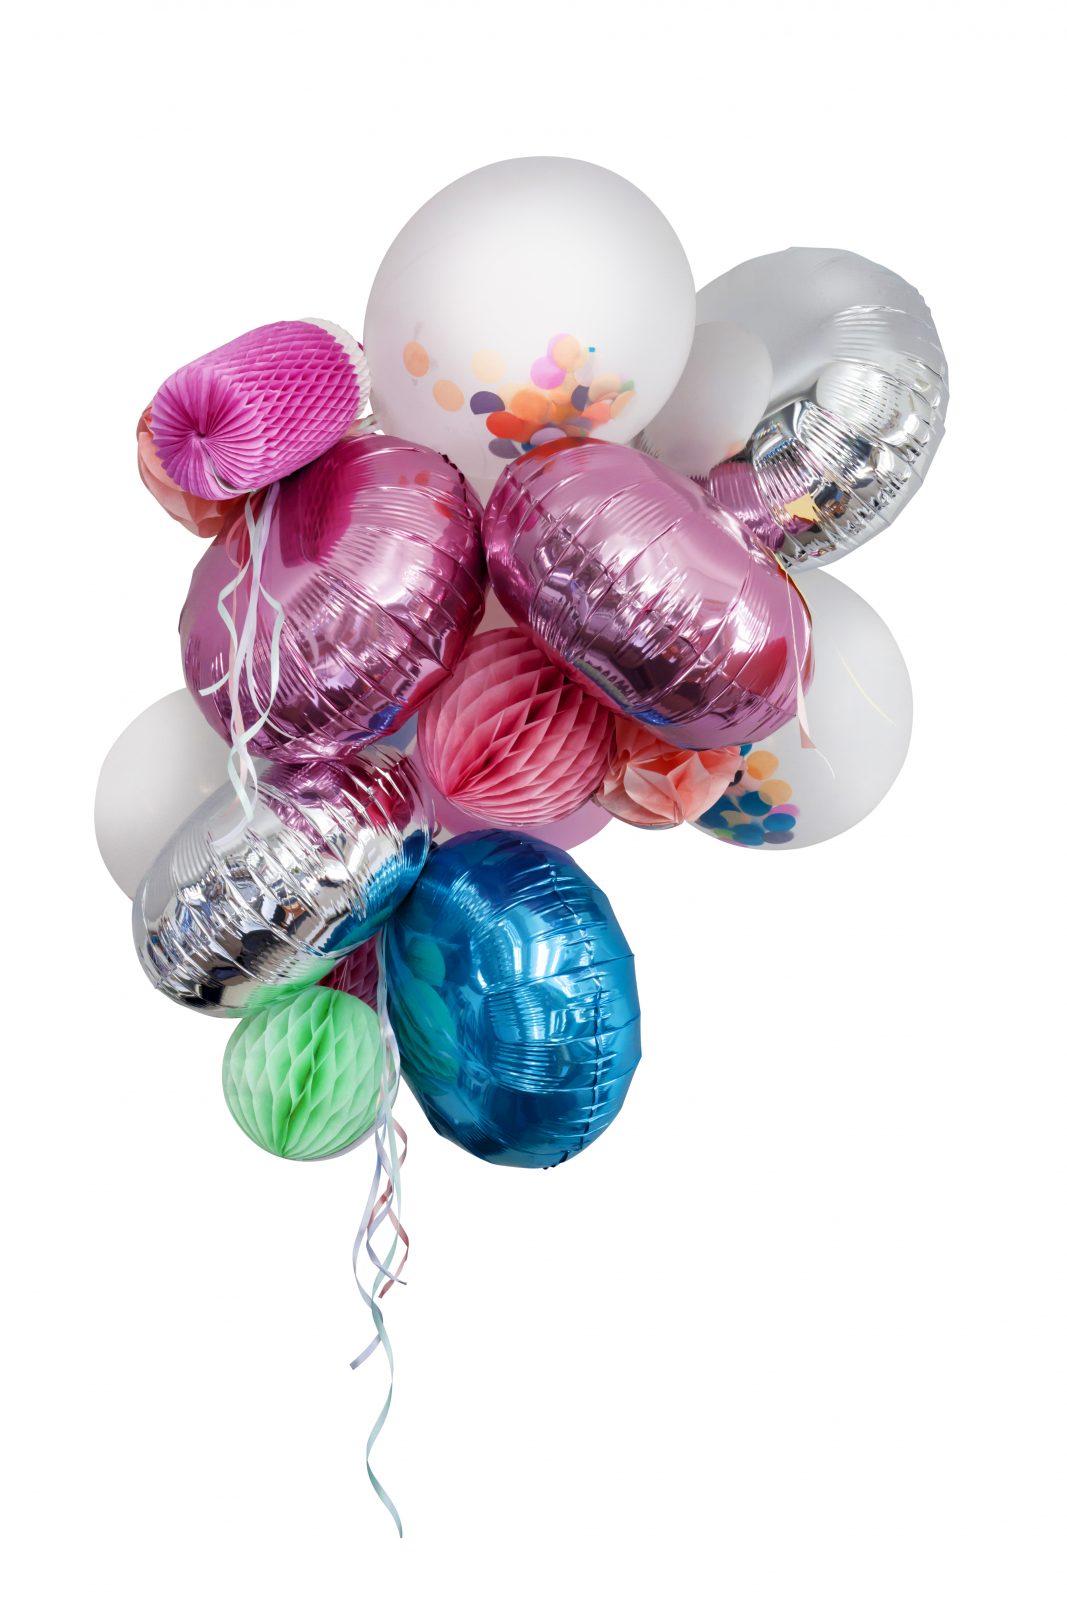 ballon mylar RECOVERY 45cm plat [©promoballons]